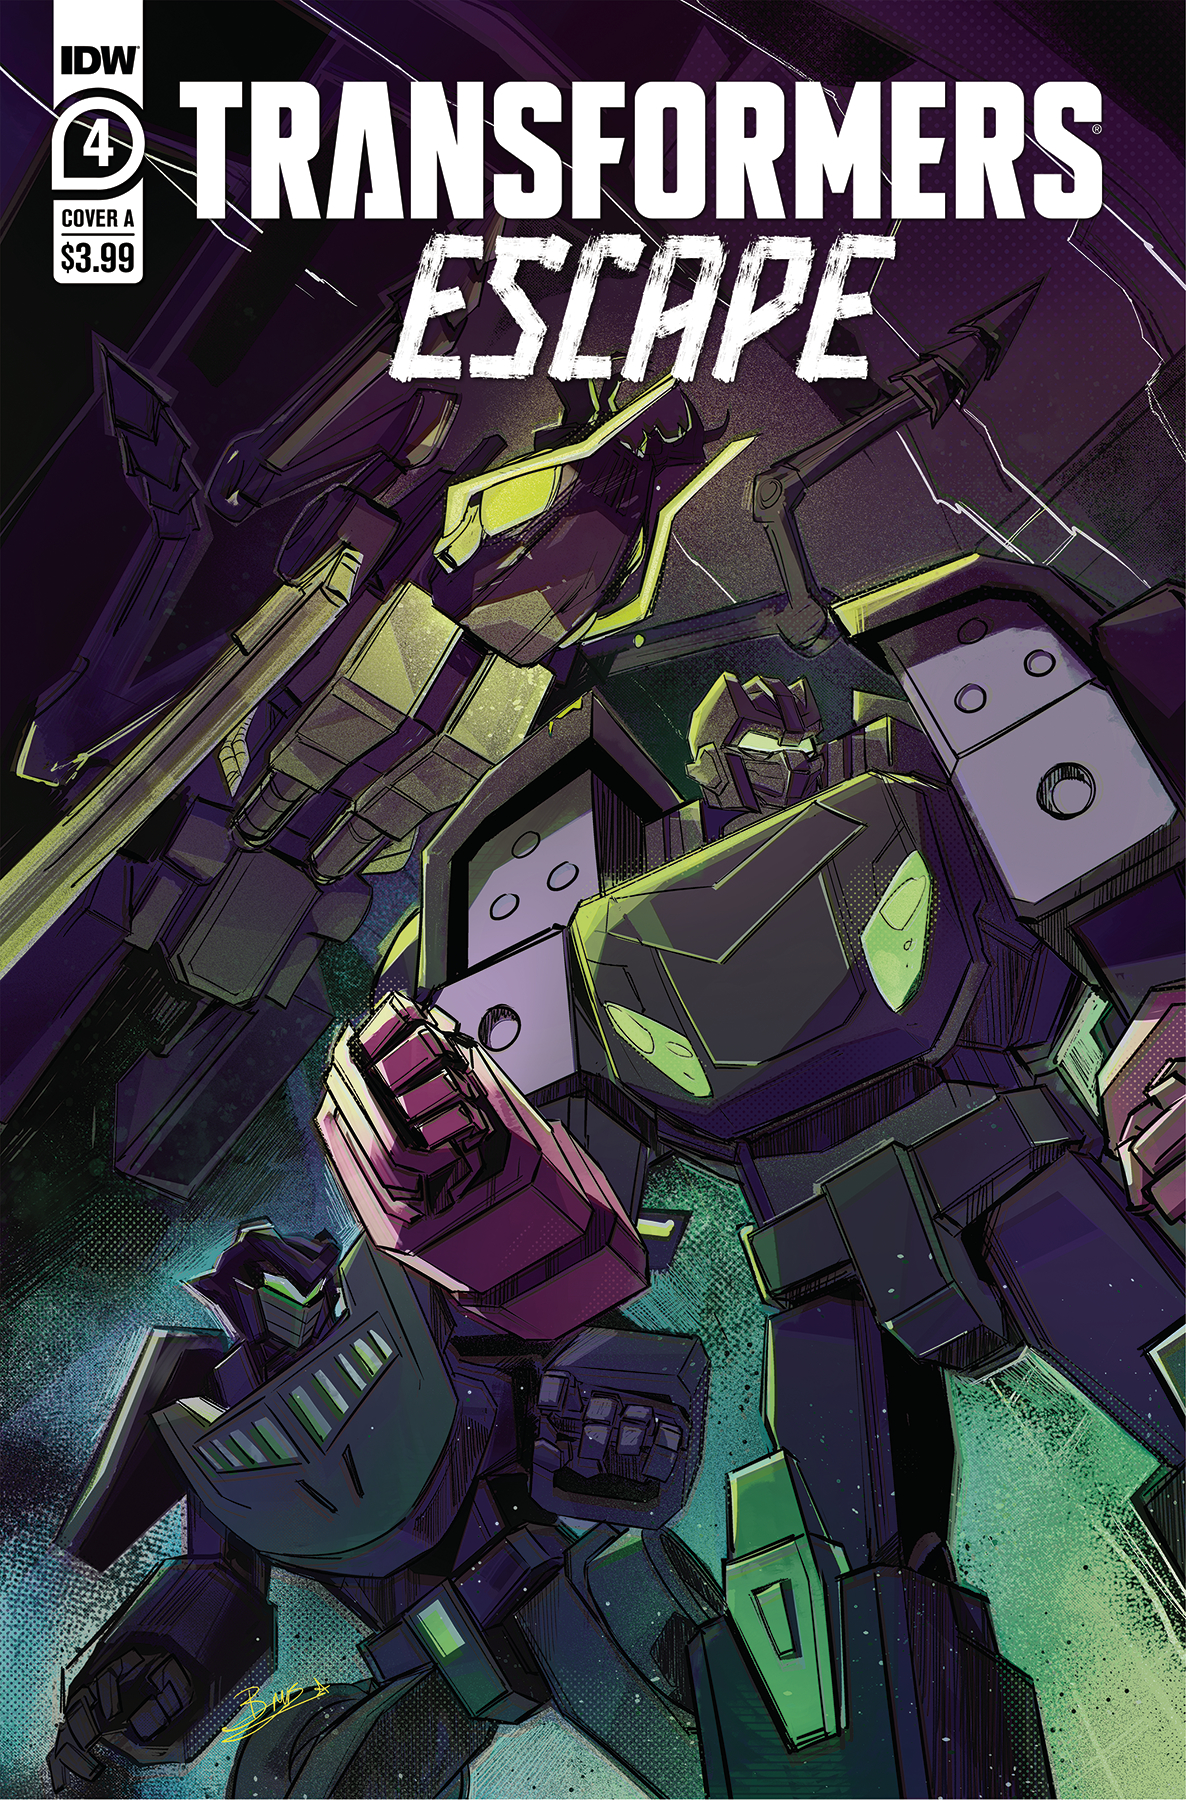 Transformers Escape #4 Cover A Mcguire-Smith (Of 5)